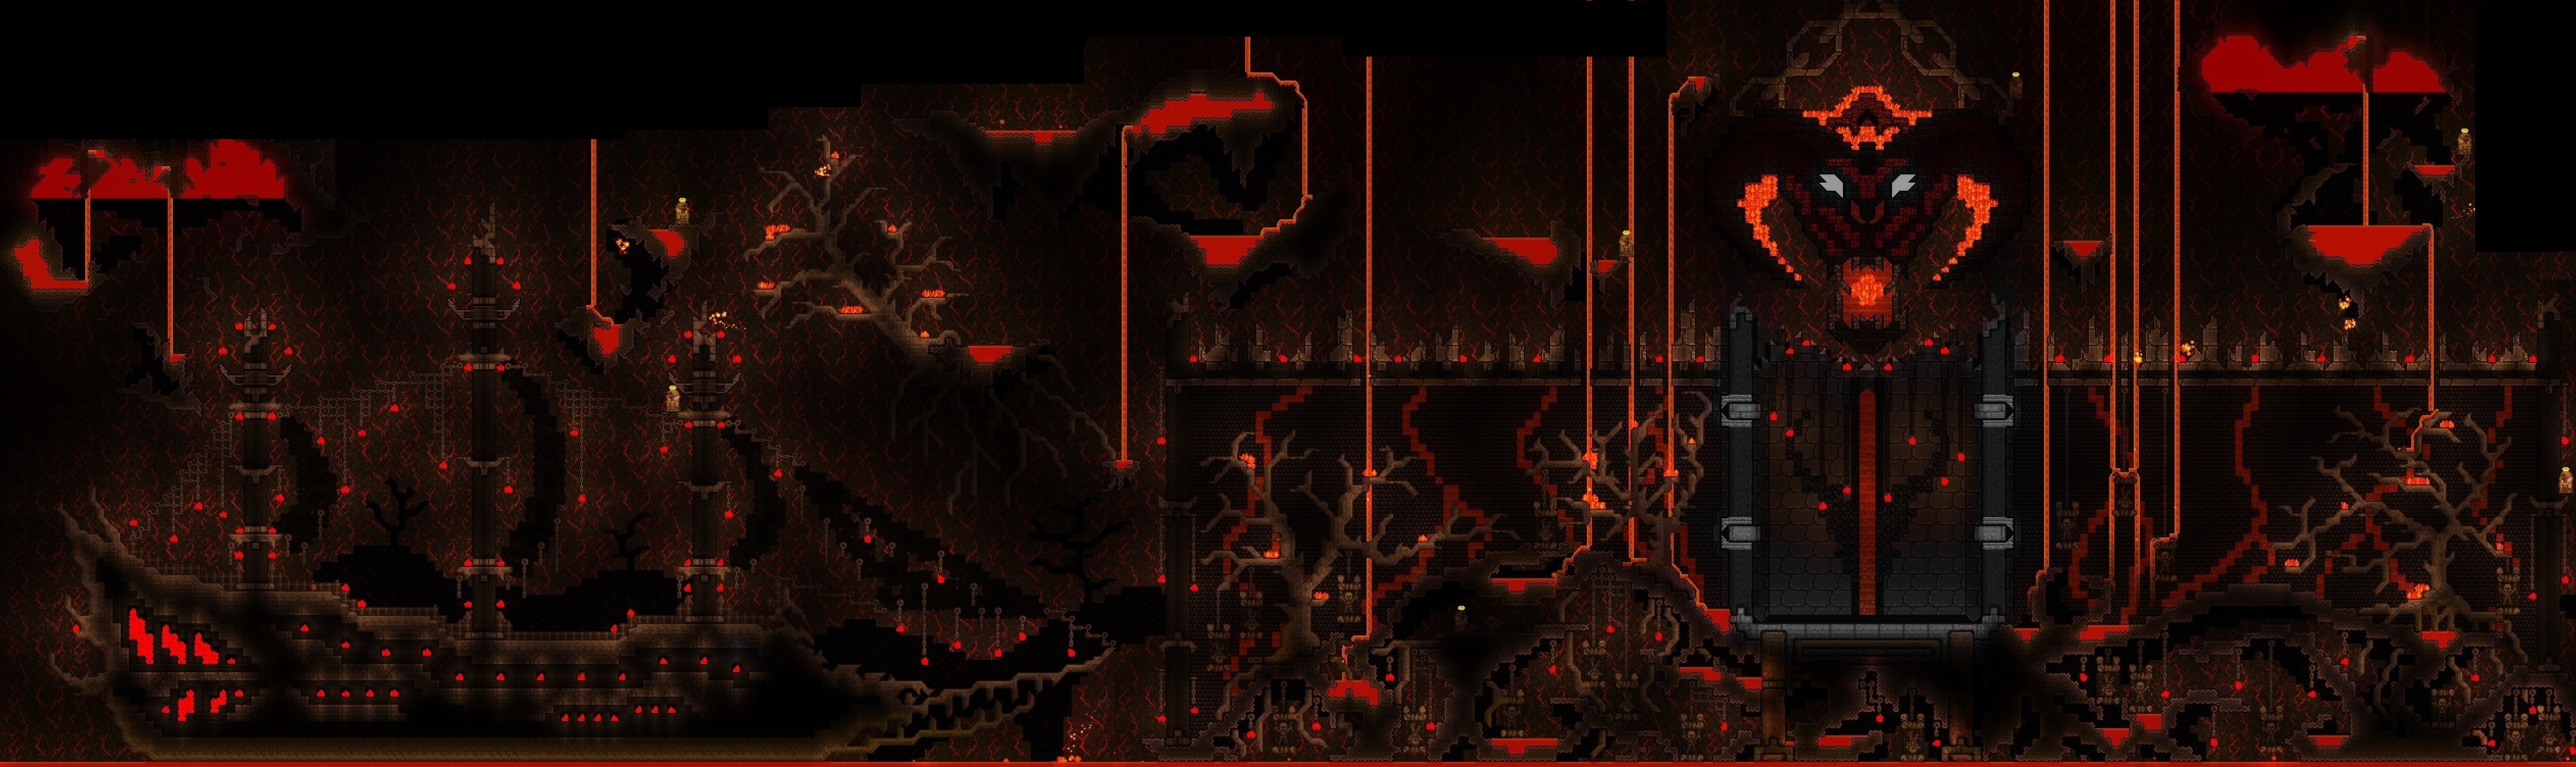 Gates of Hell v3.jpg